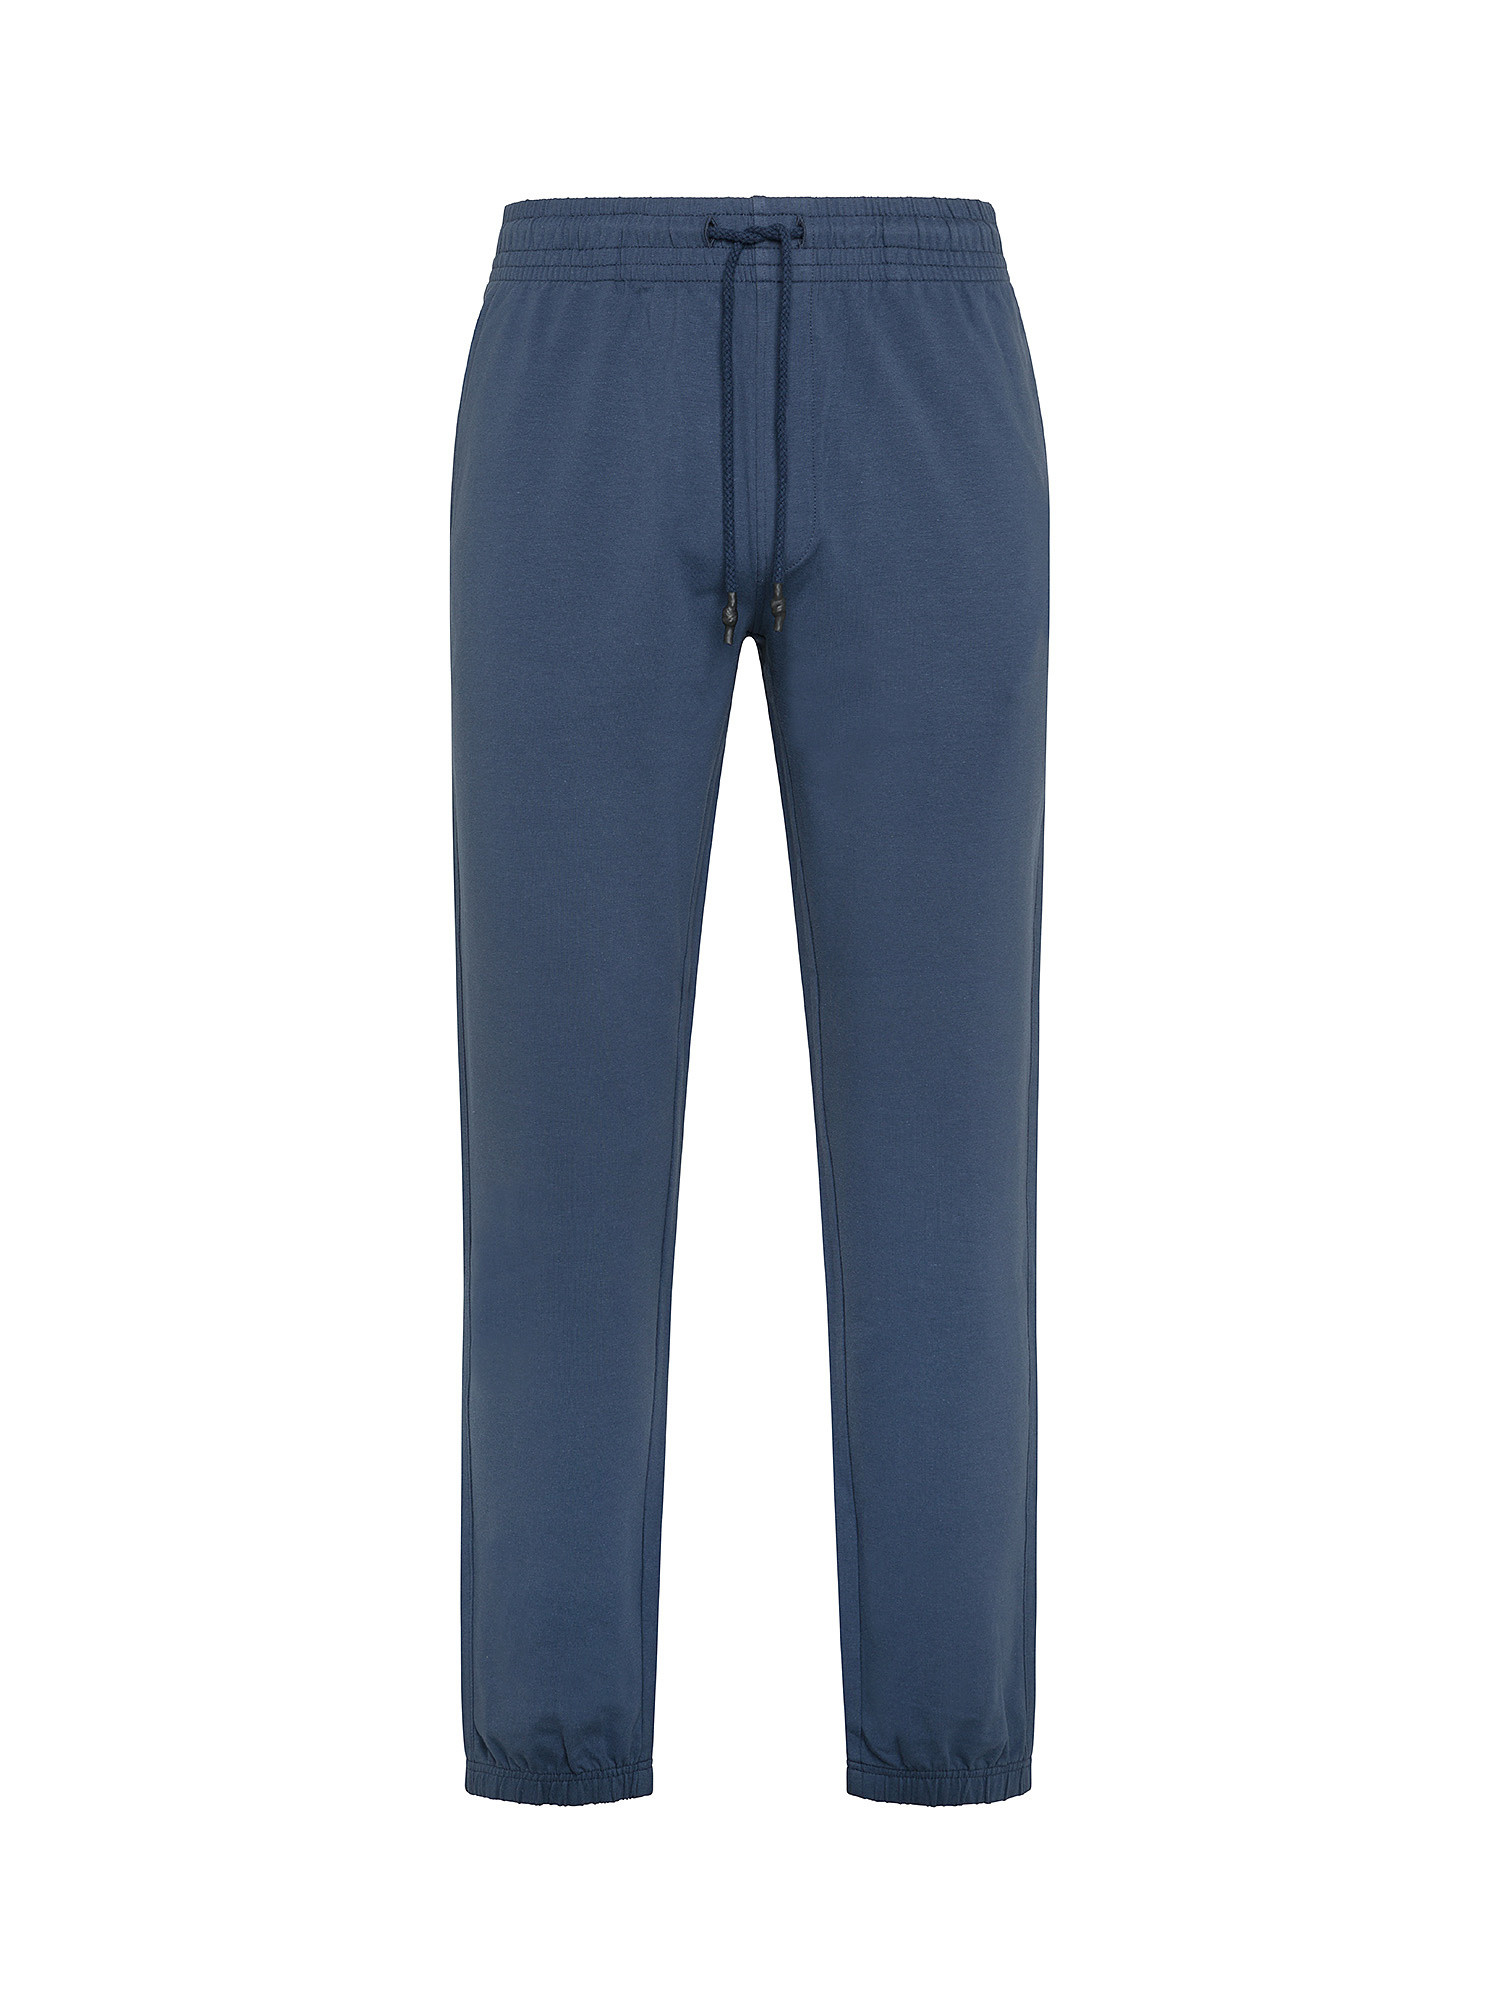 JCT - Pantaloni in cotone elasticizzato, Blu, large image number 0